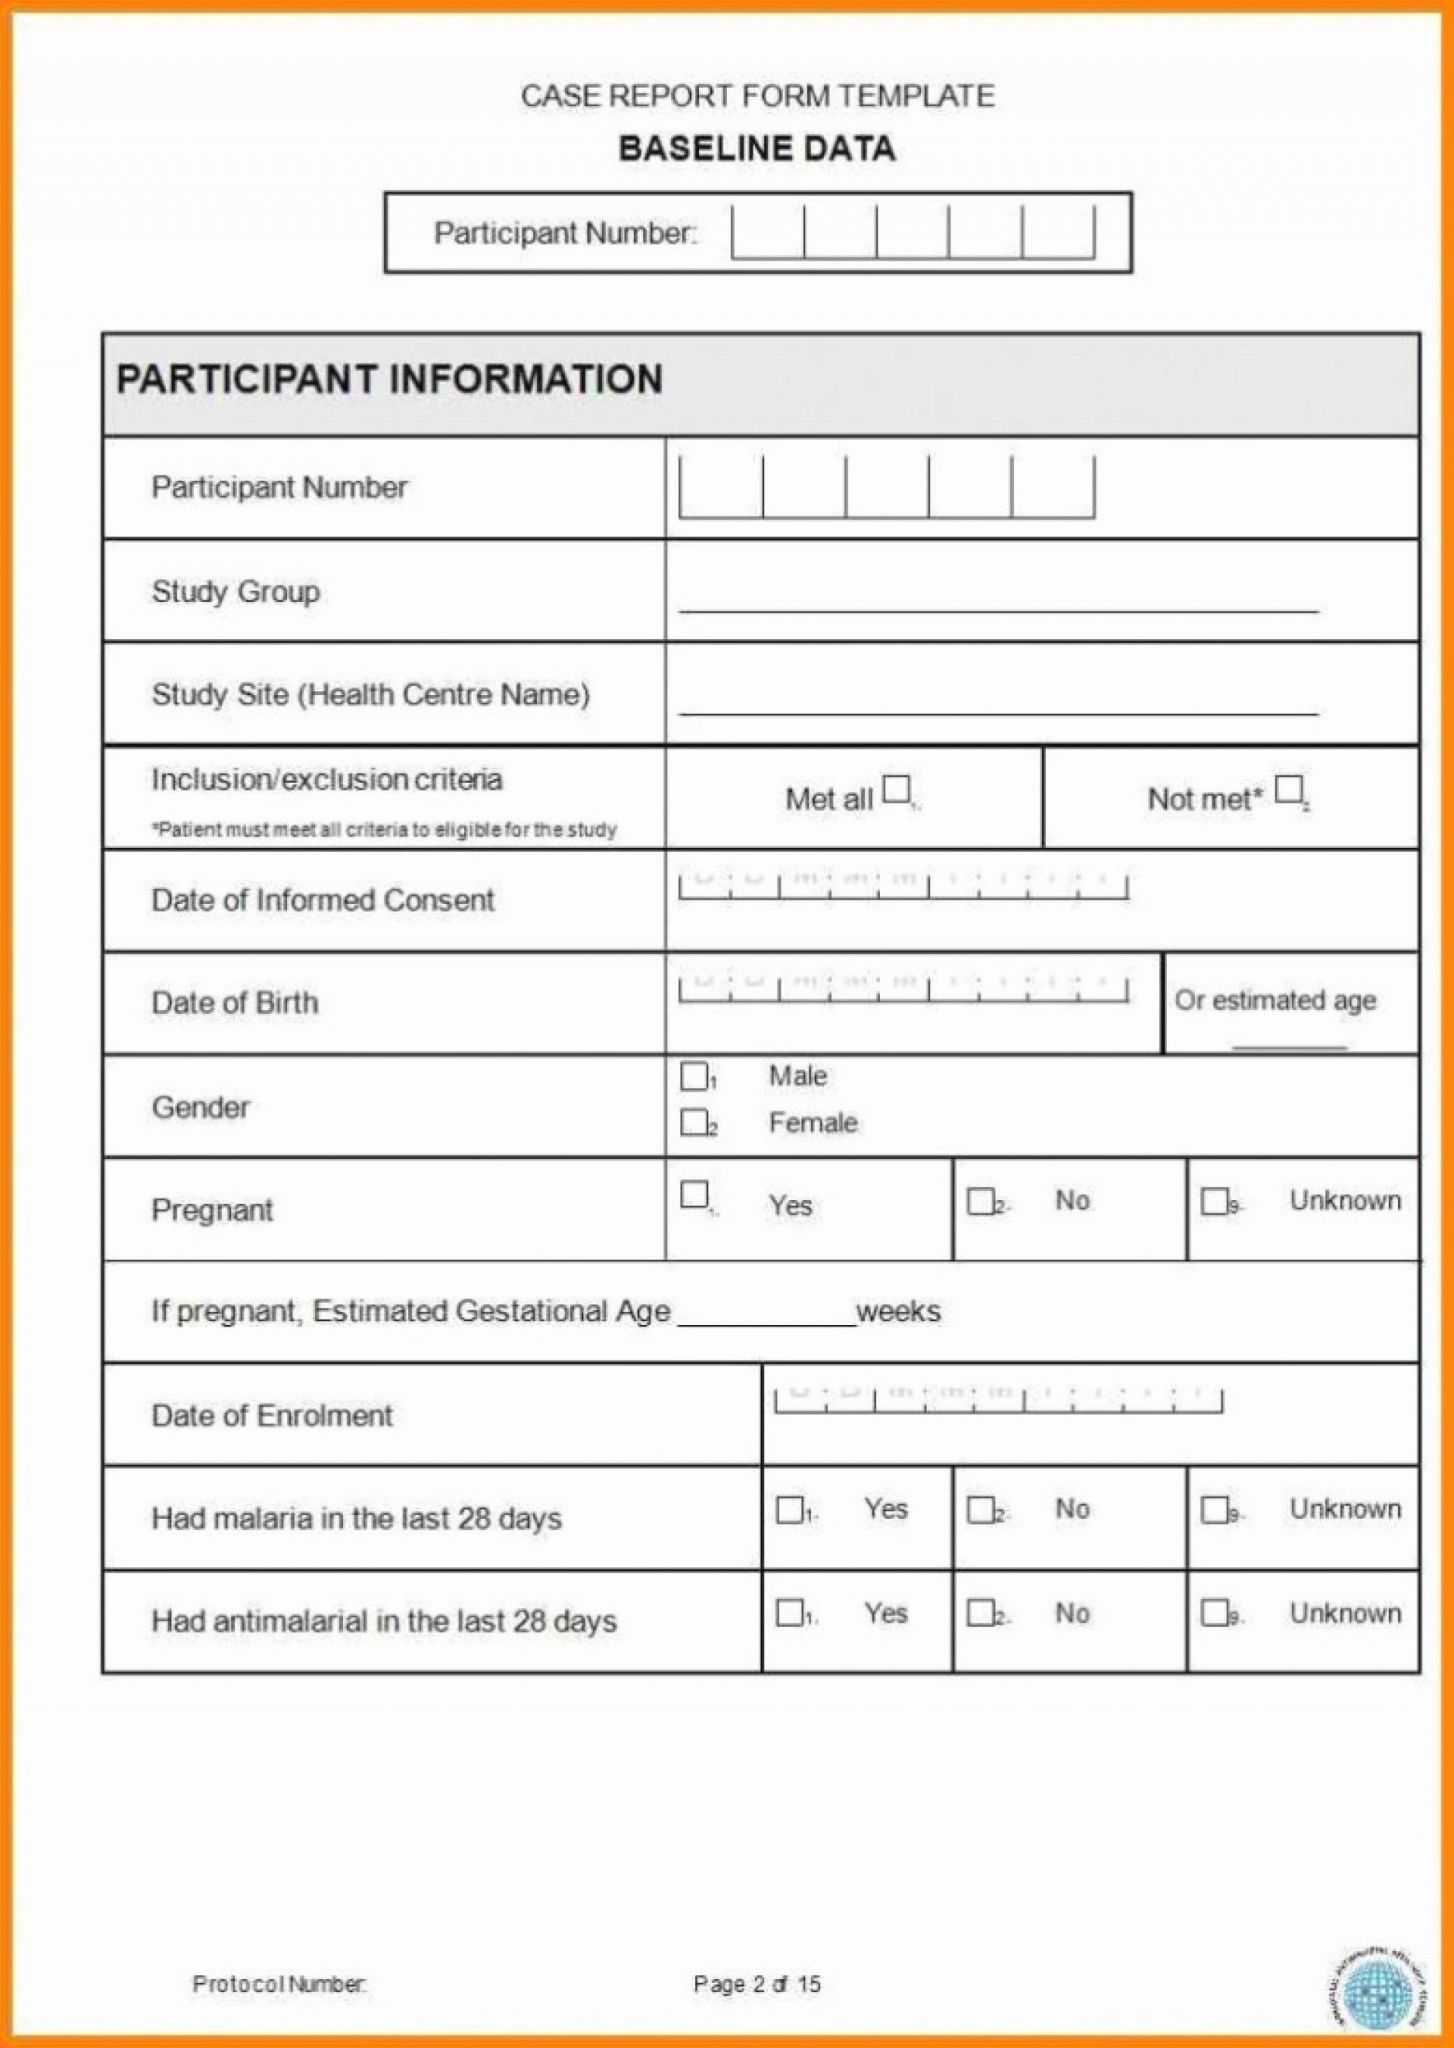 Case Report Form Template Unique Catering Resume Clinical Regarding Case Report Form Template Clinical Trials